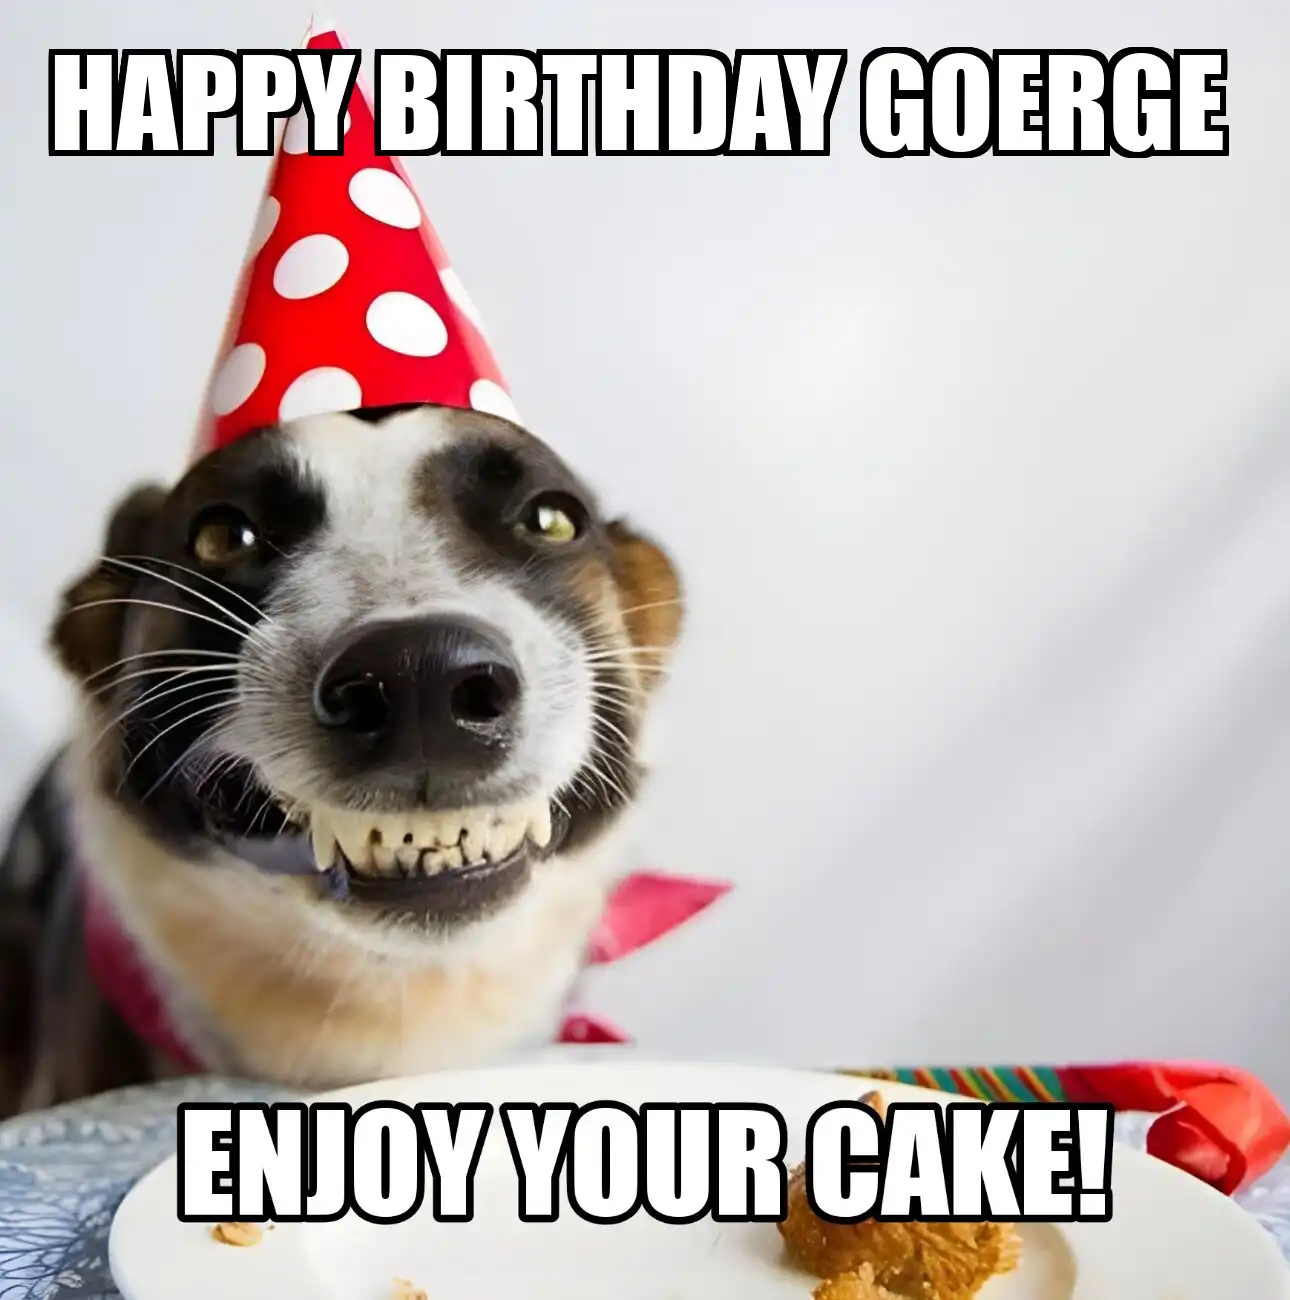 Happy Birthday Goerge Enjoy Your Cake Dog Meme